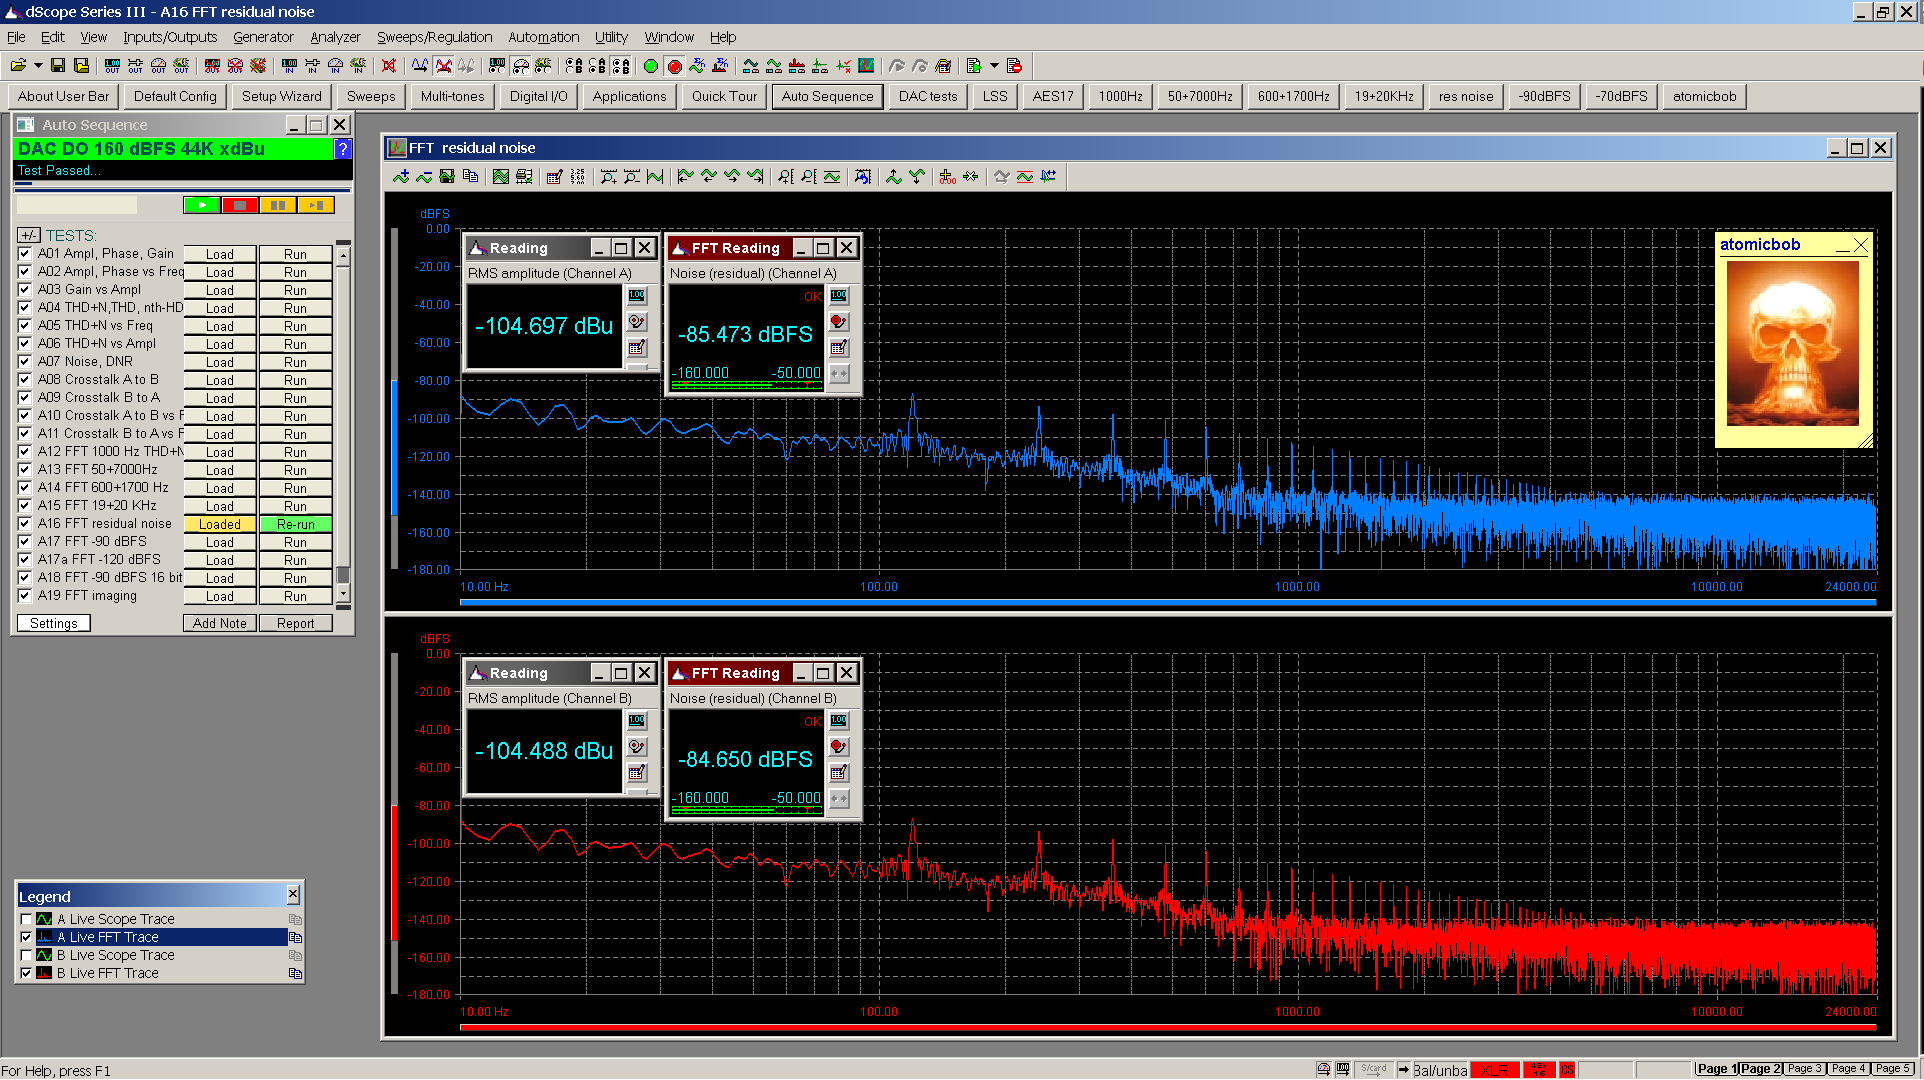 03 20210621 gamma2 residual noise FFT spdif SE - 180 dB range - t2.png